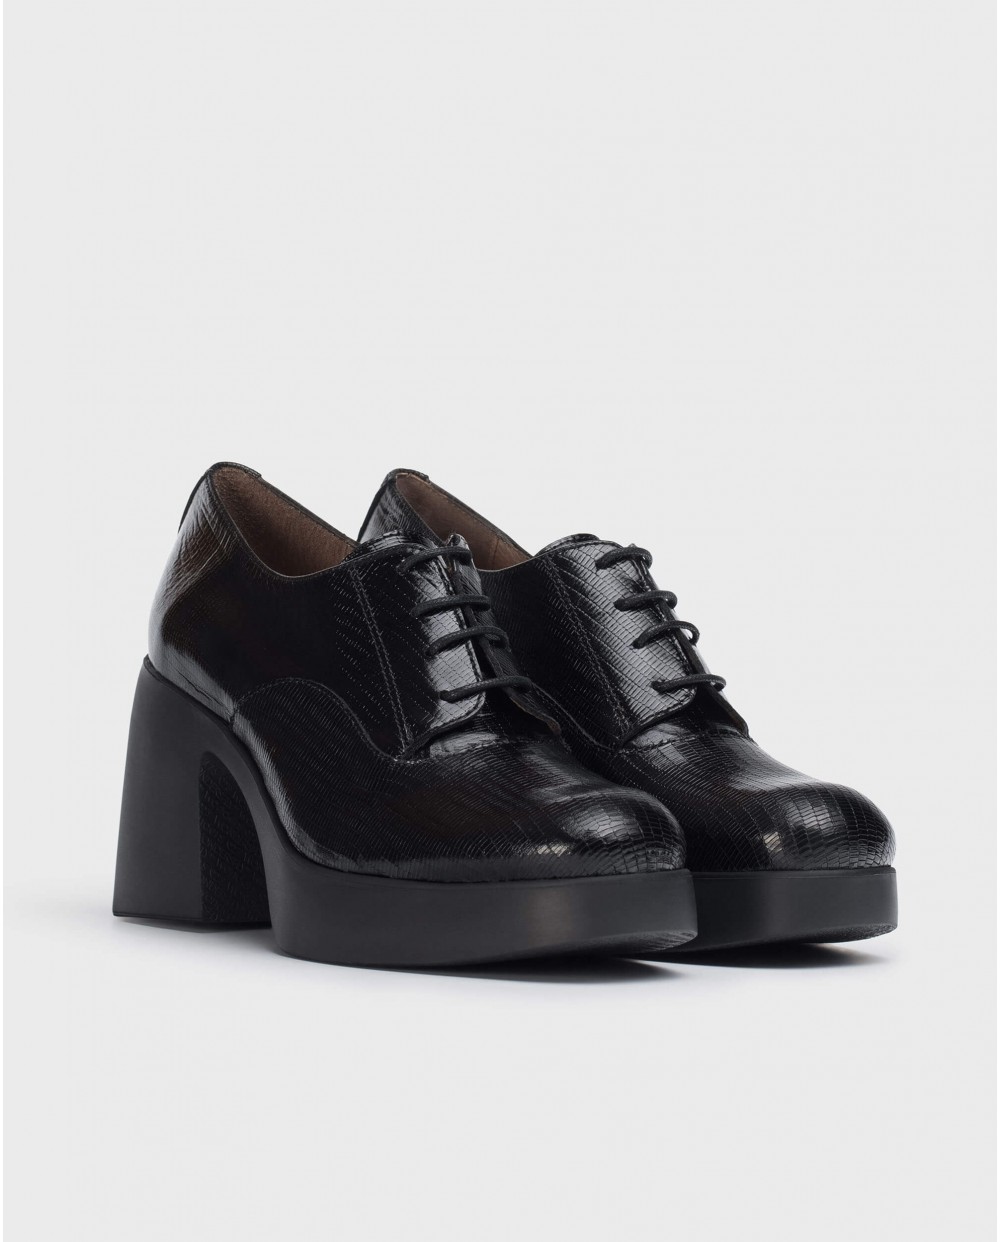 Wonders-Platforms-Black Loira shoes.